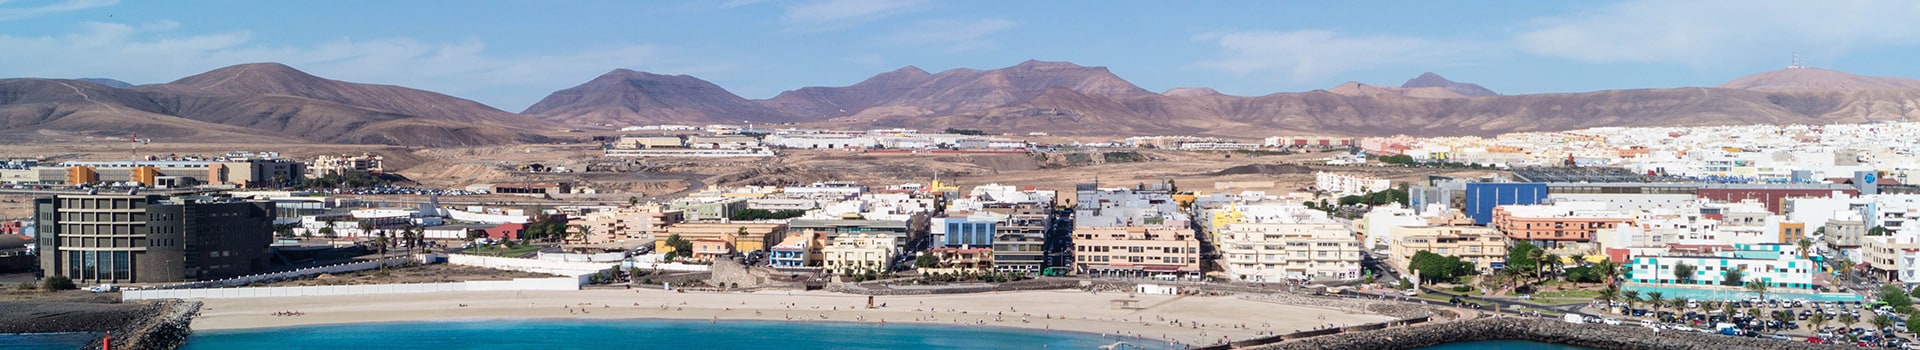 Teneriffa - Fuerteventura